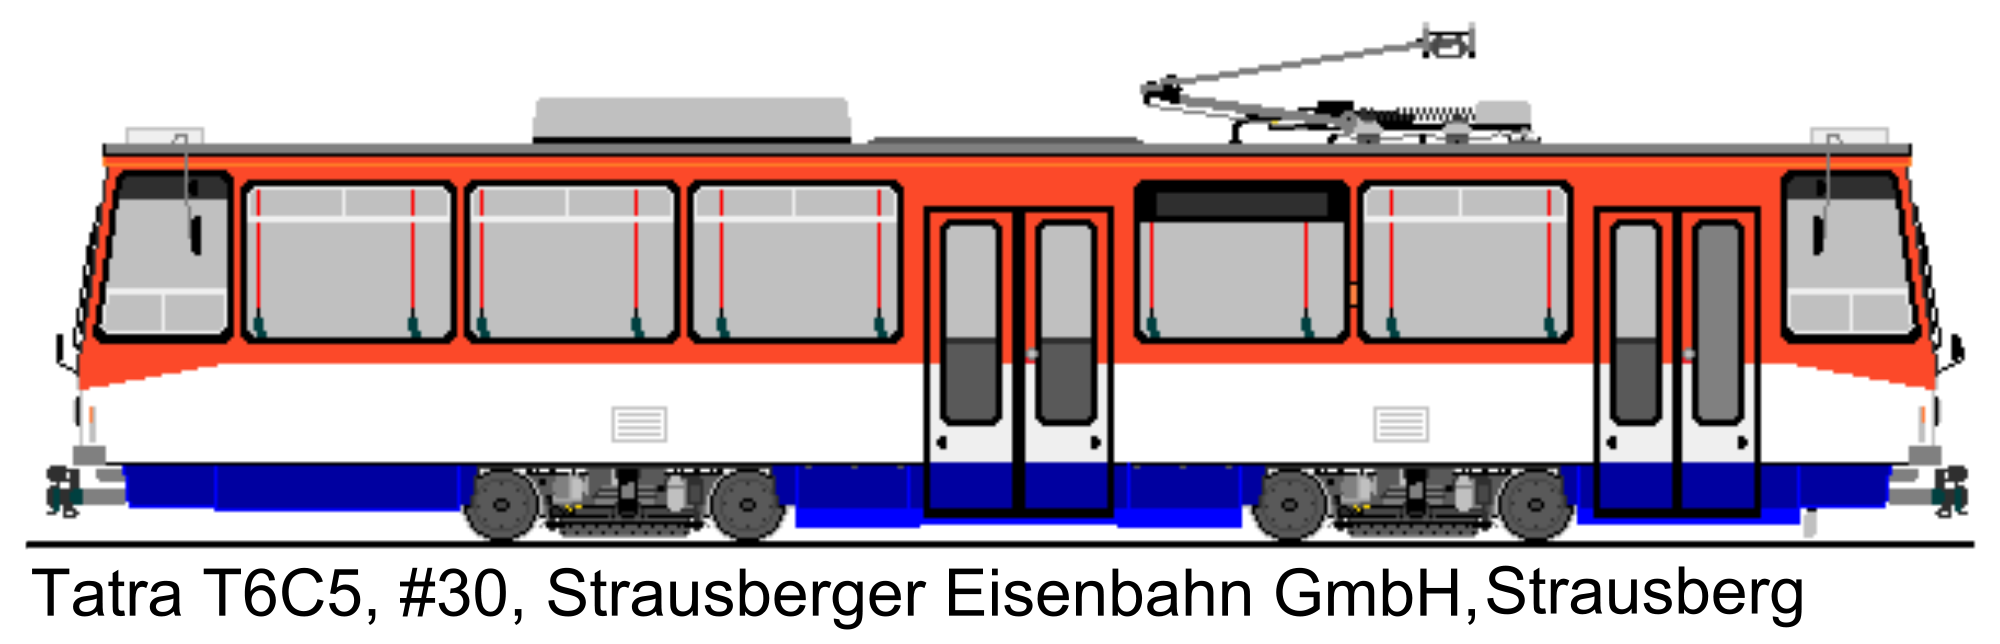 2000px-Scheme of the tram Tatra T6C5 svg.png